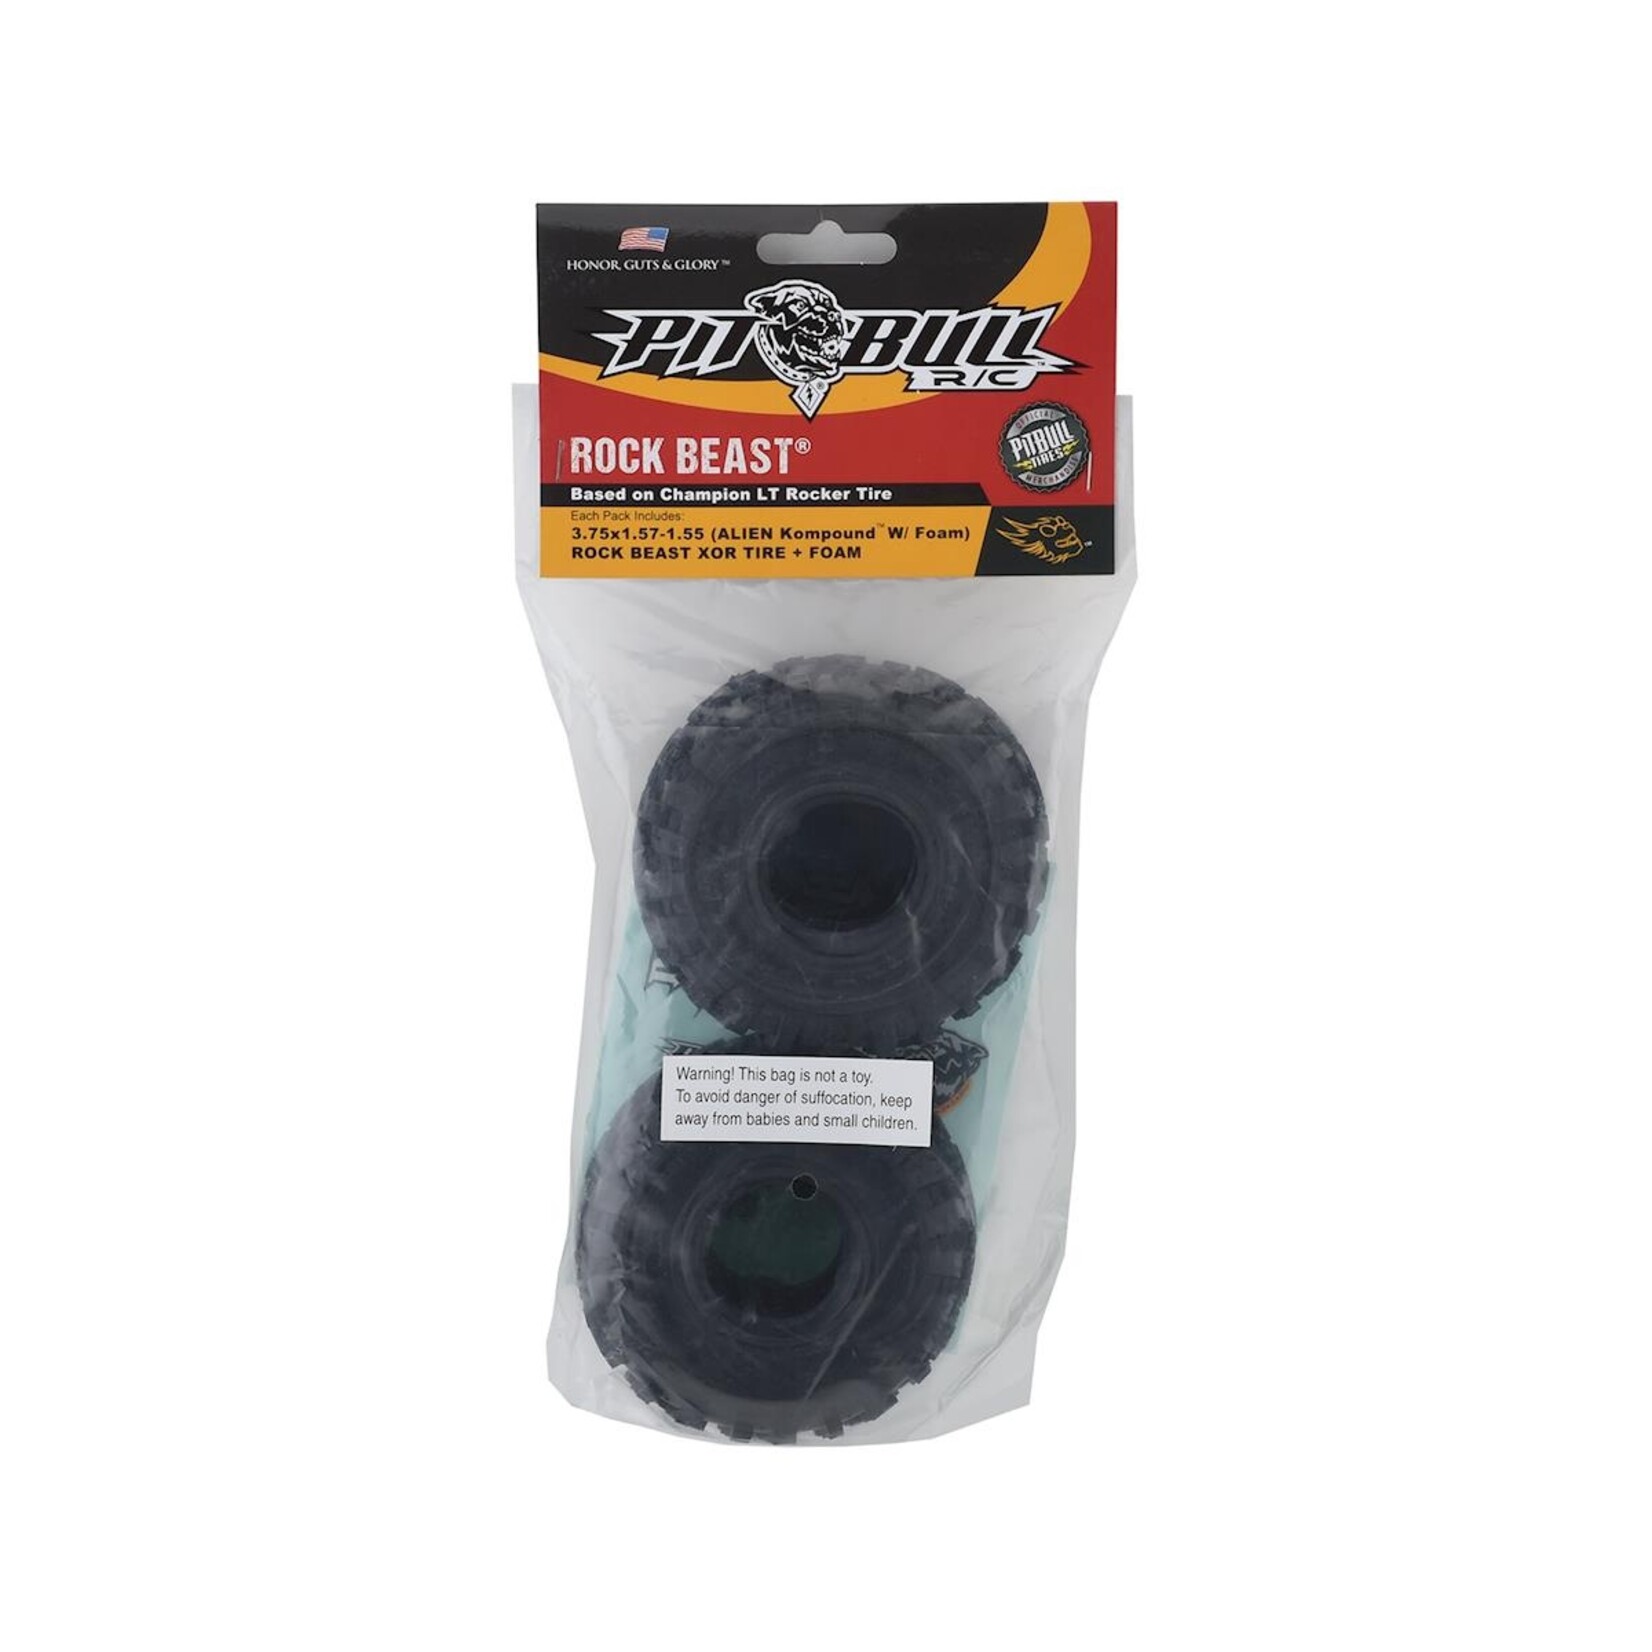 Pit Bull Pit Bull Tires Rock Beast XOR 1.55" Scale Rock Crawler Tires w/Foams (2) (Alien) #PB9020AK